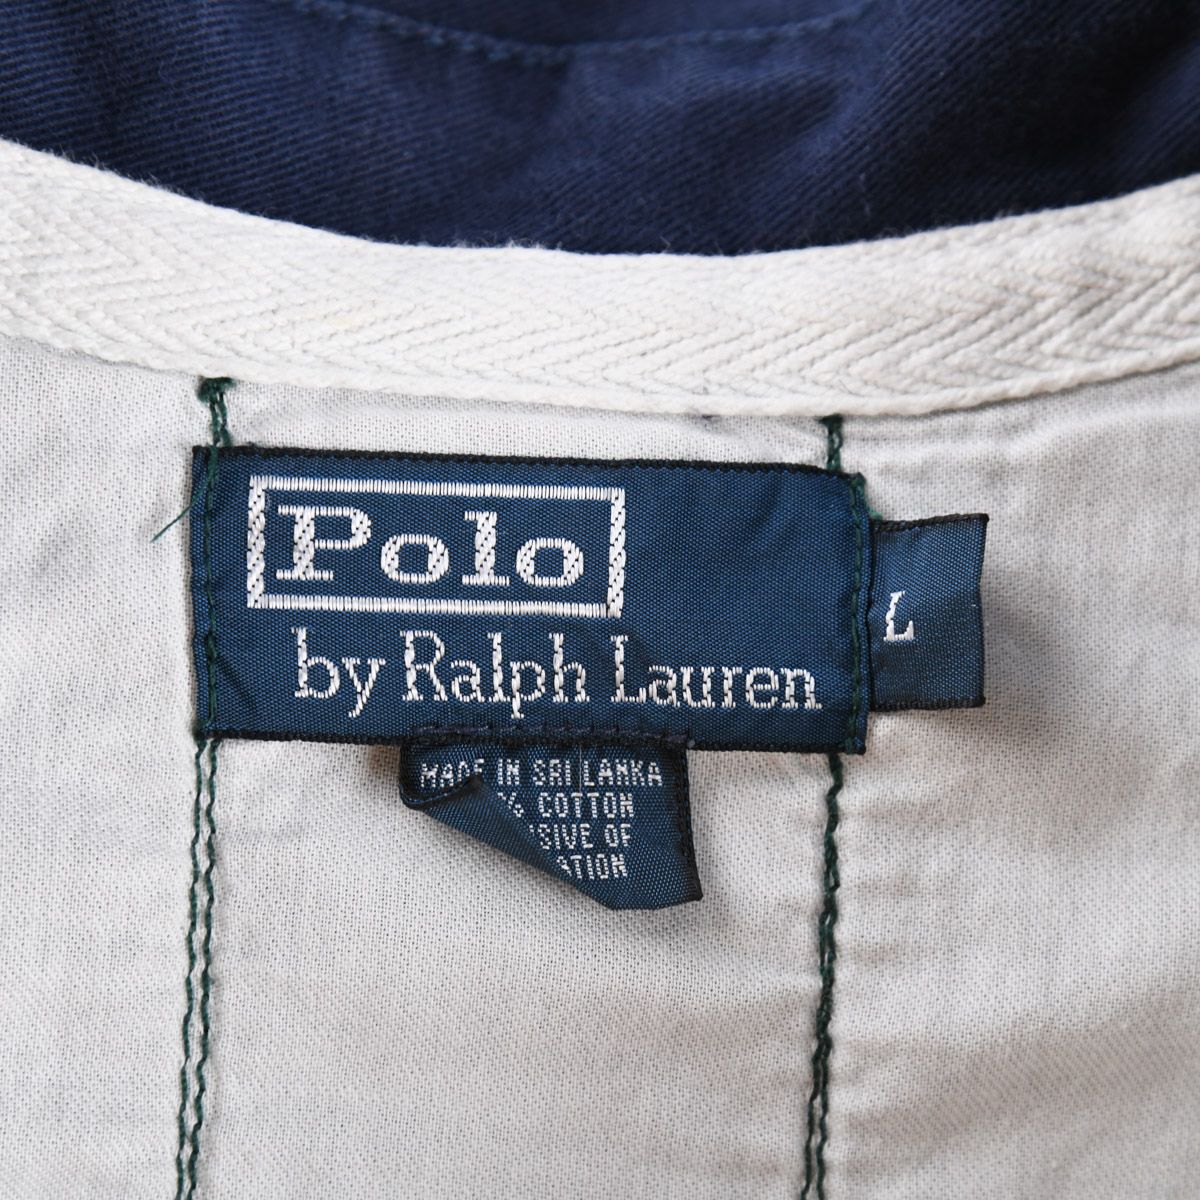 Ralph Lauren Embroidered Designs Rugby Shirt